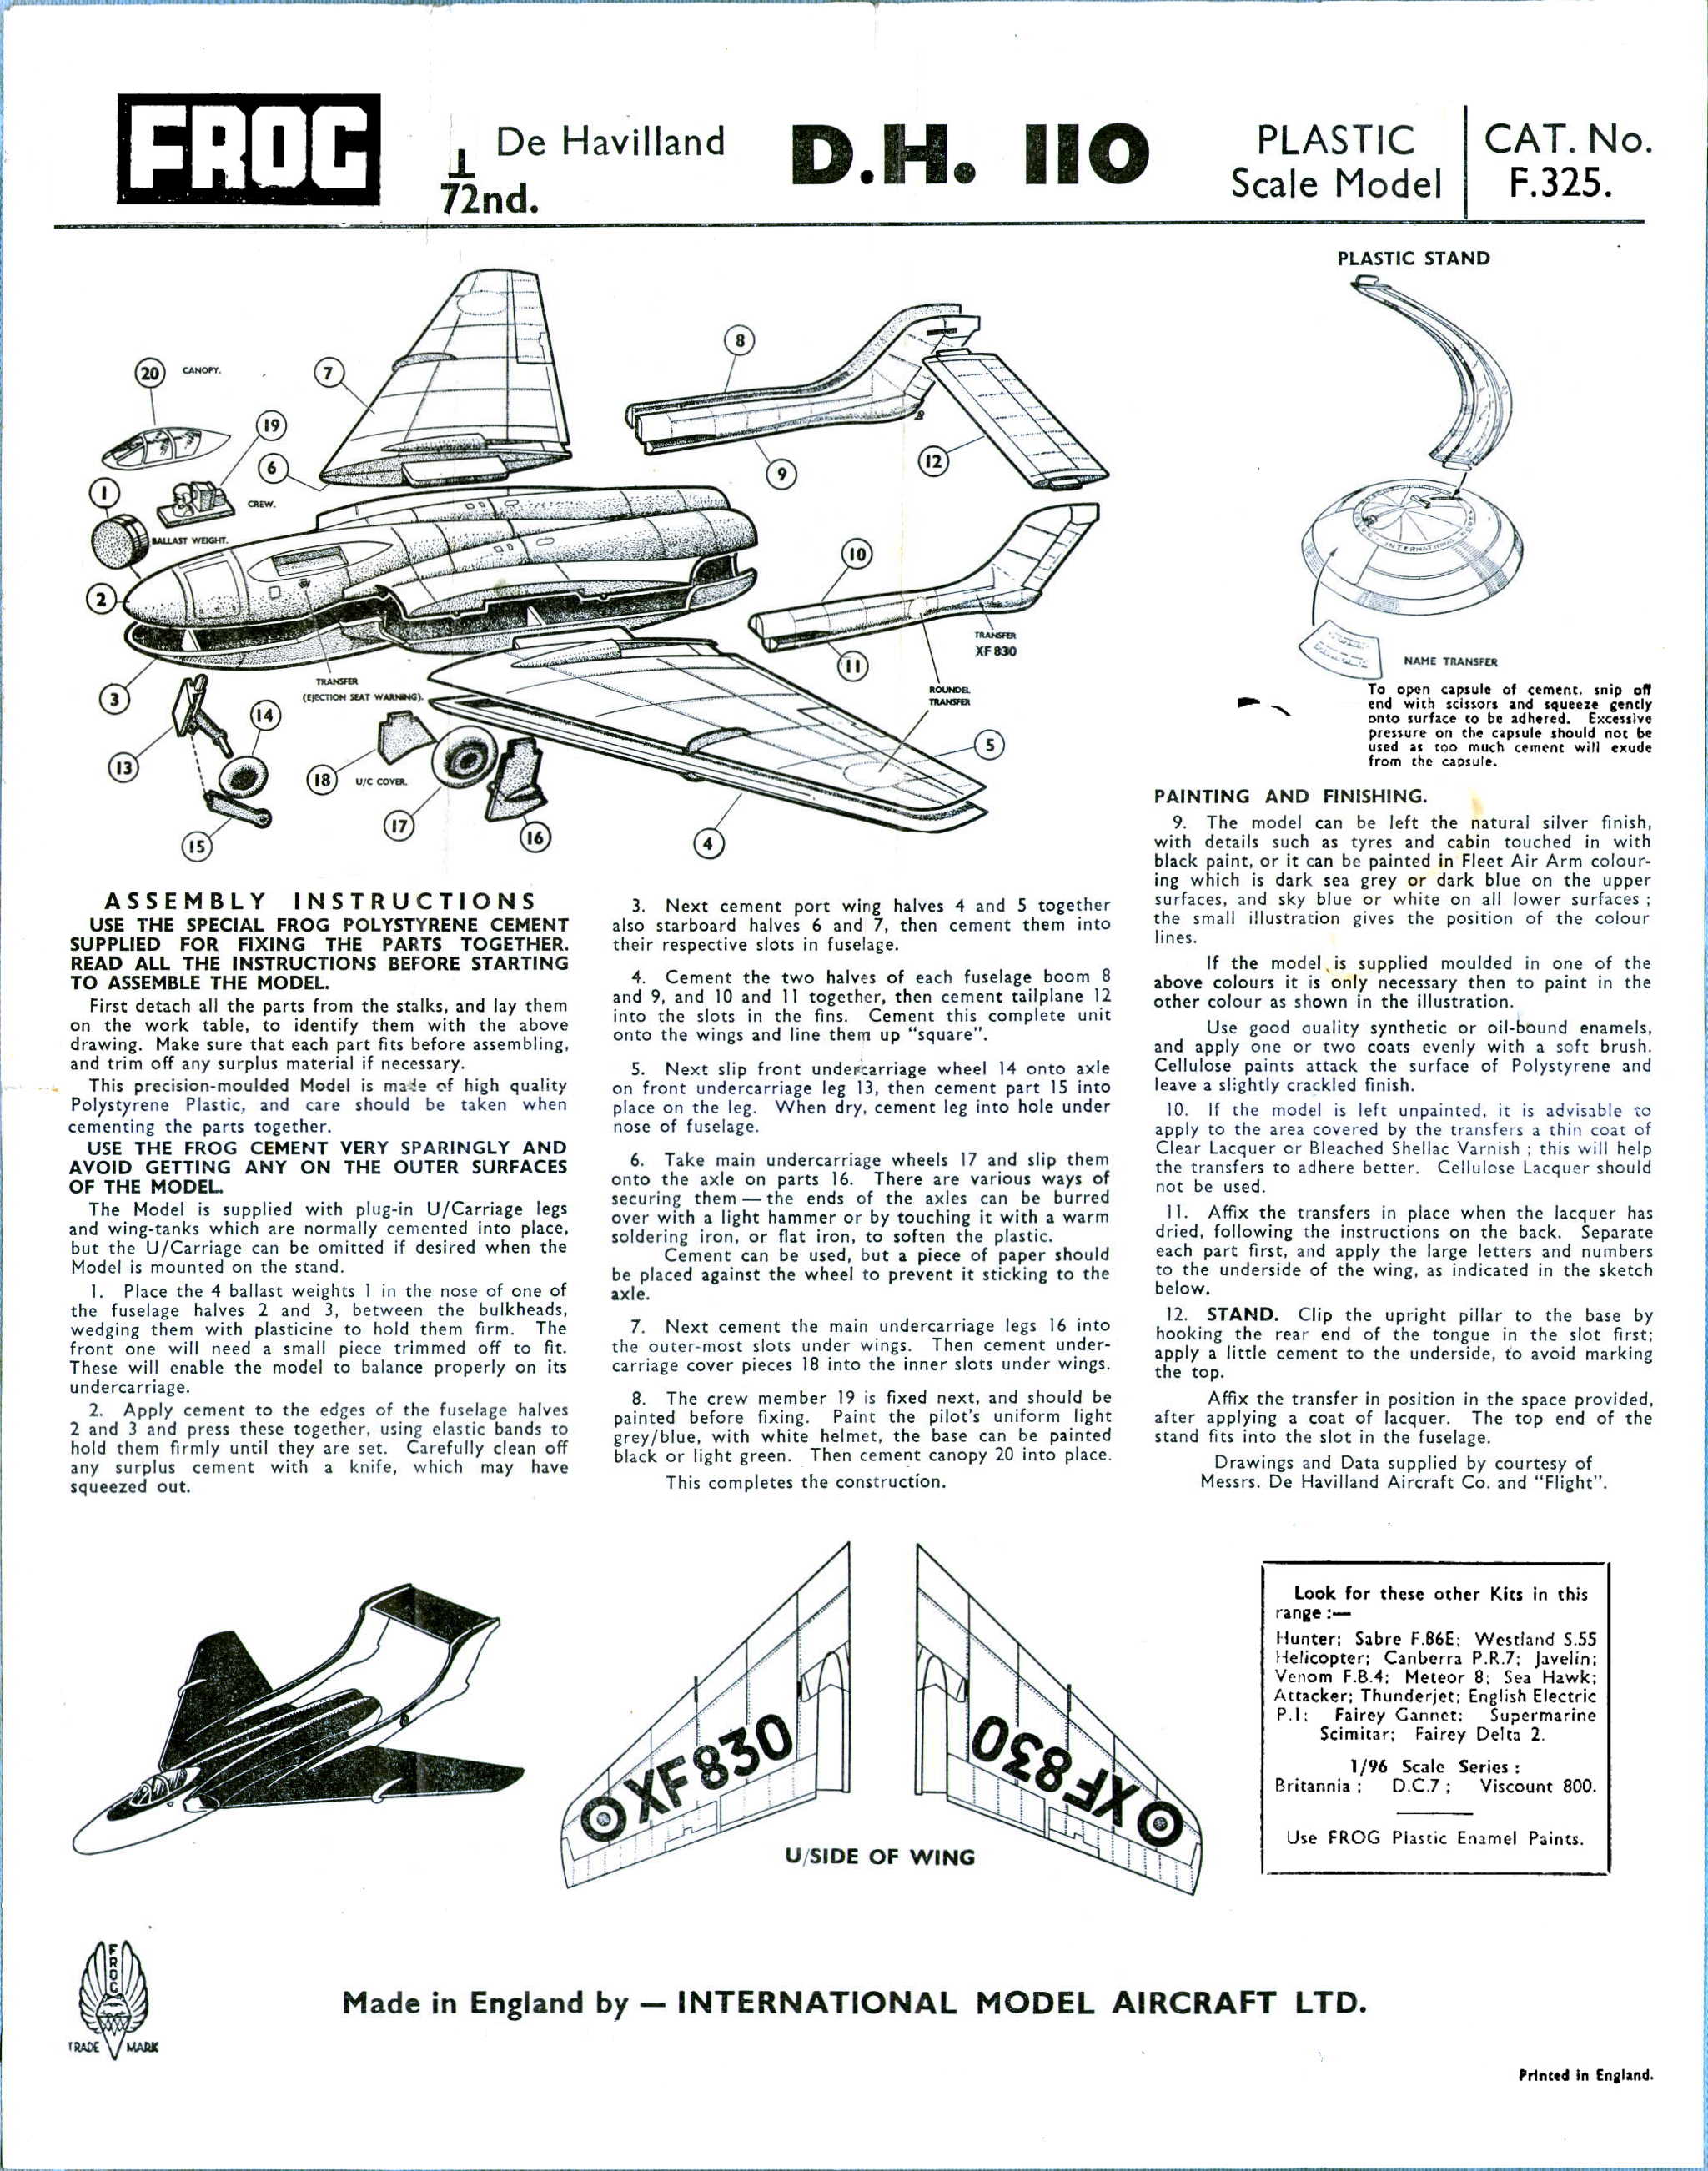 Инструкция по сборке FROG F325 DH. 110 Twin Jet Naval Fighter, International Model Aircraft Limited, 1962-63